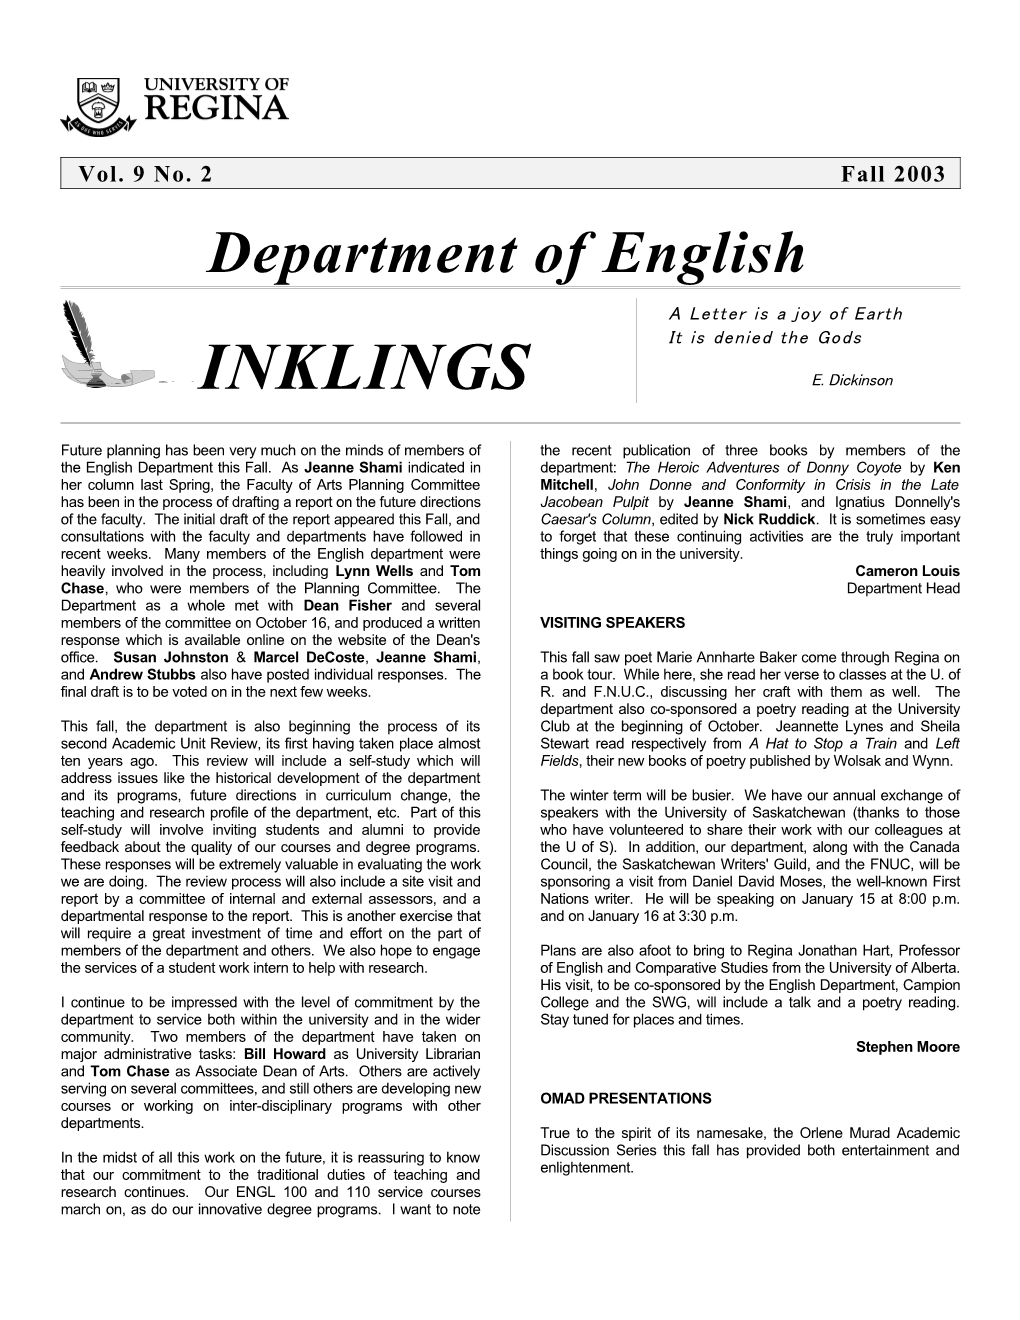 INKLINGSFALL 2003 Page 1